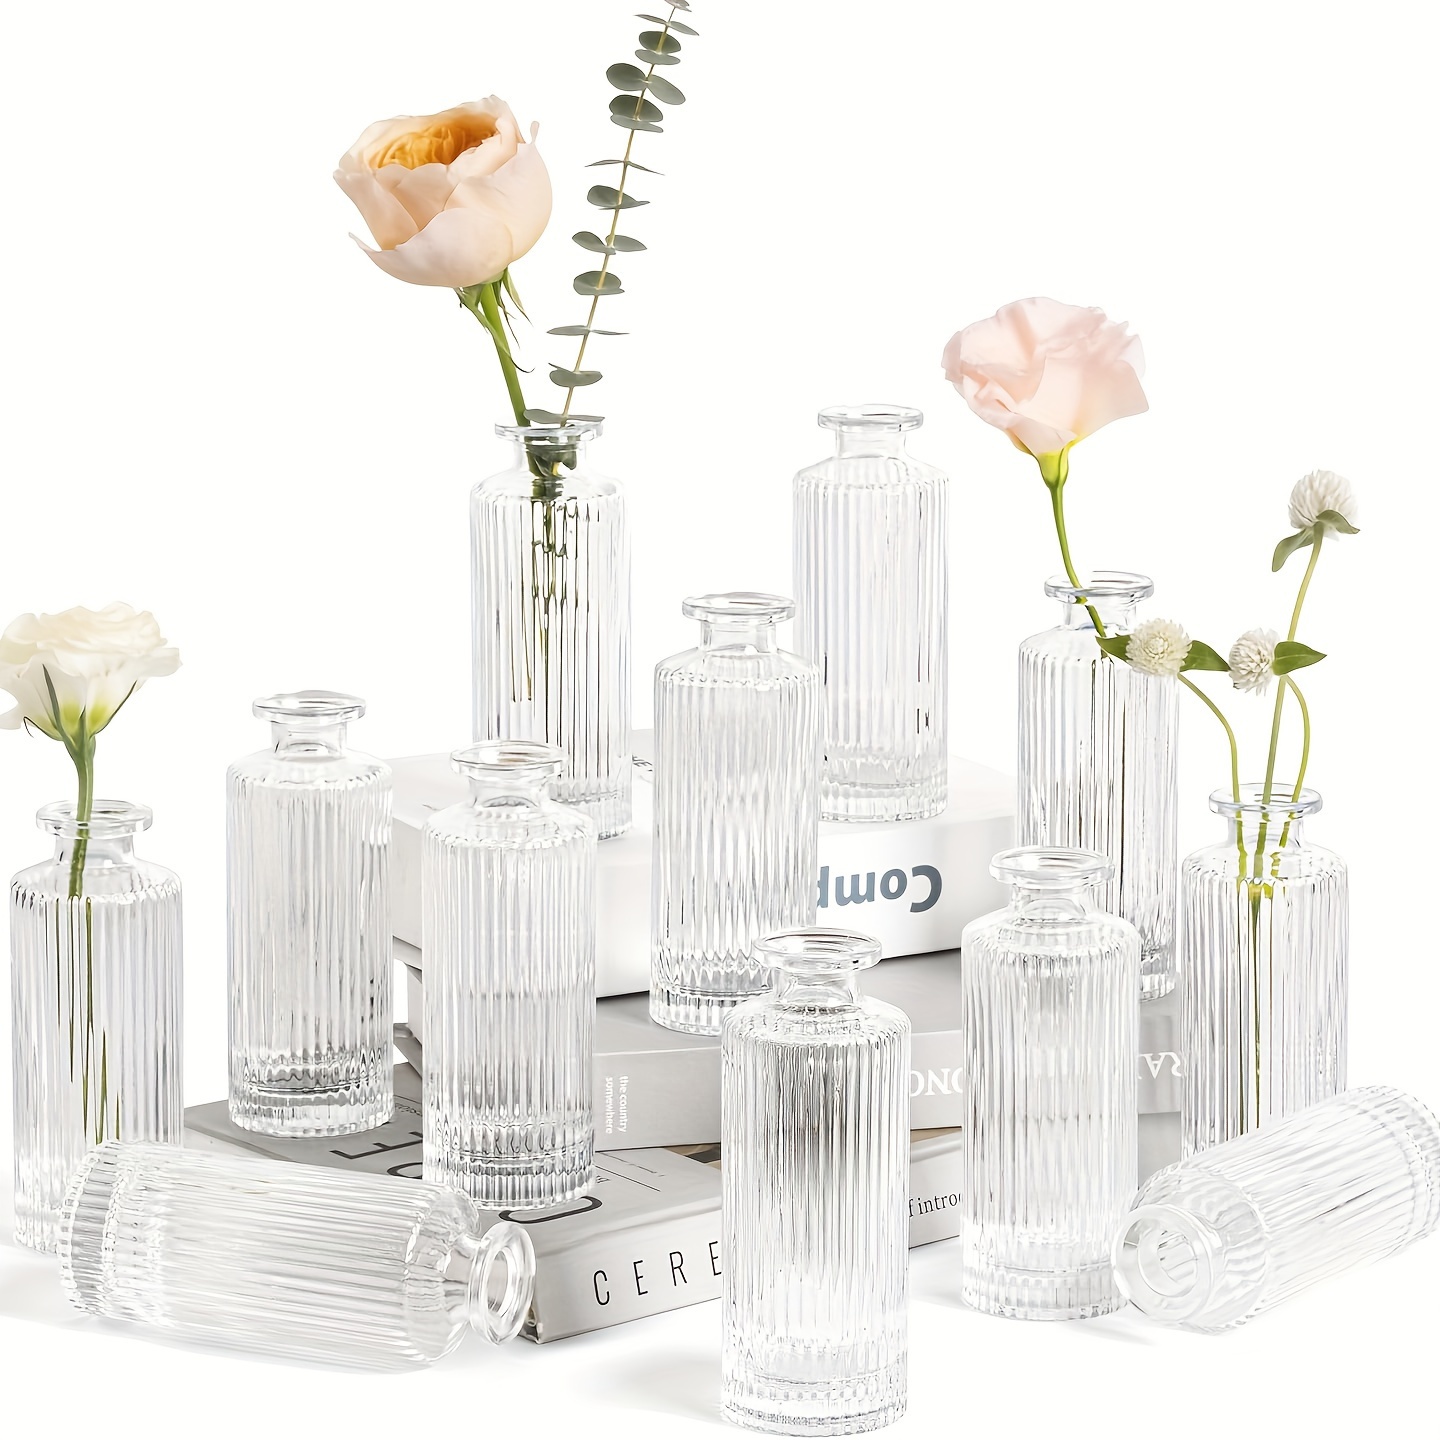 

Vintage Striped Glass Bud Vases, Set Of 12 Small Decorative Cylinder Flower Vases, Mini Tabletop Vase For Office, Wedding Reception, Home Decor - Floral Theme